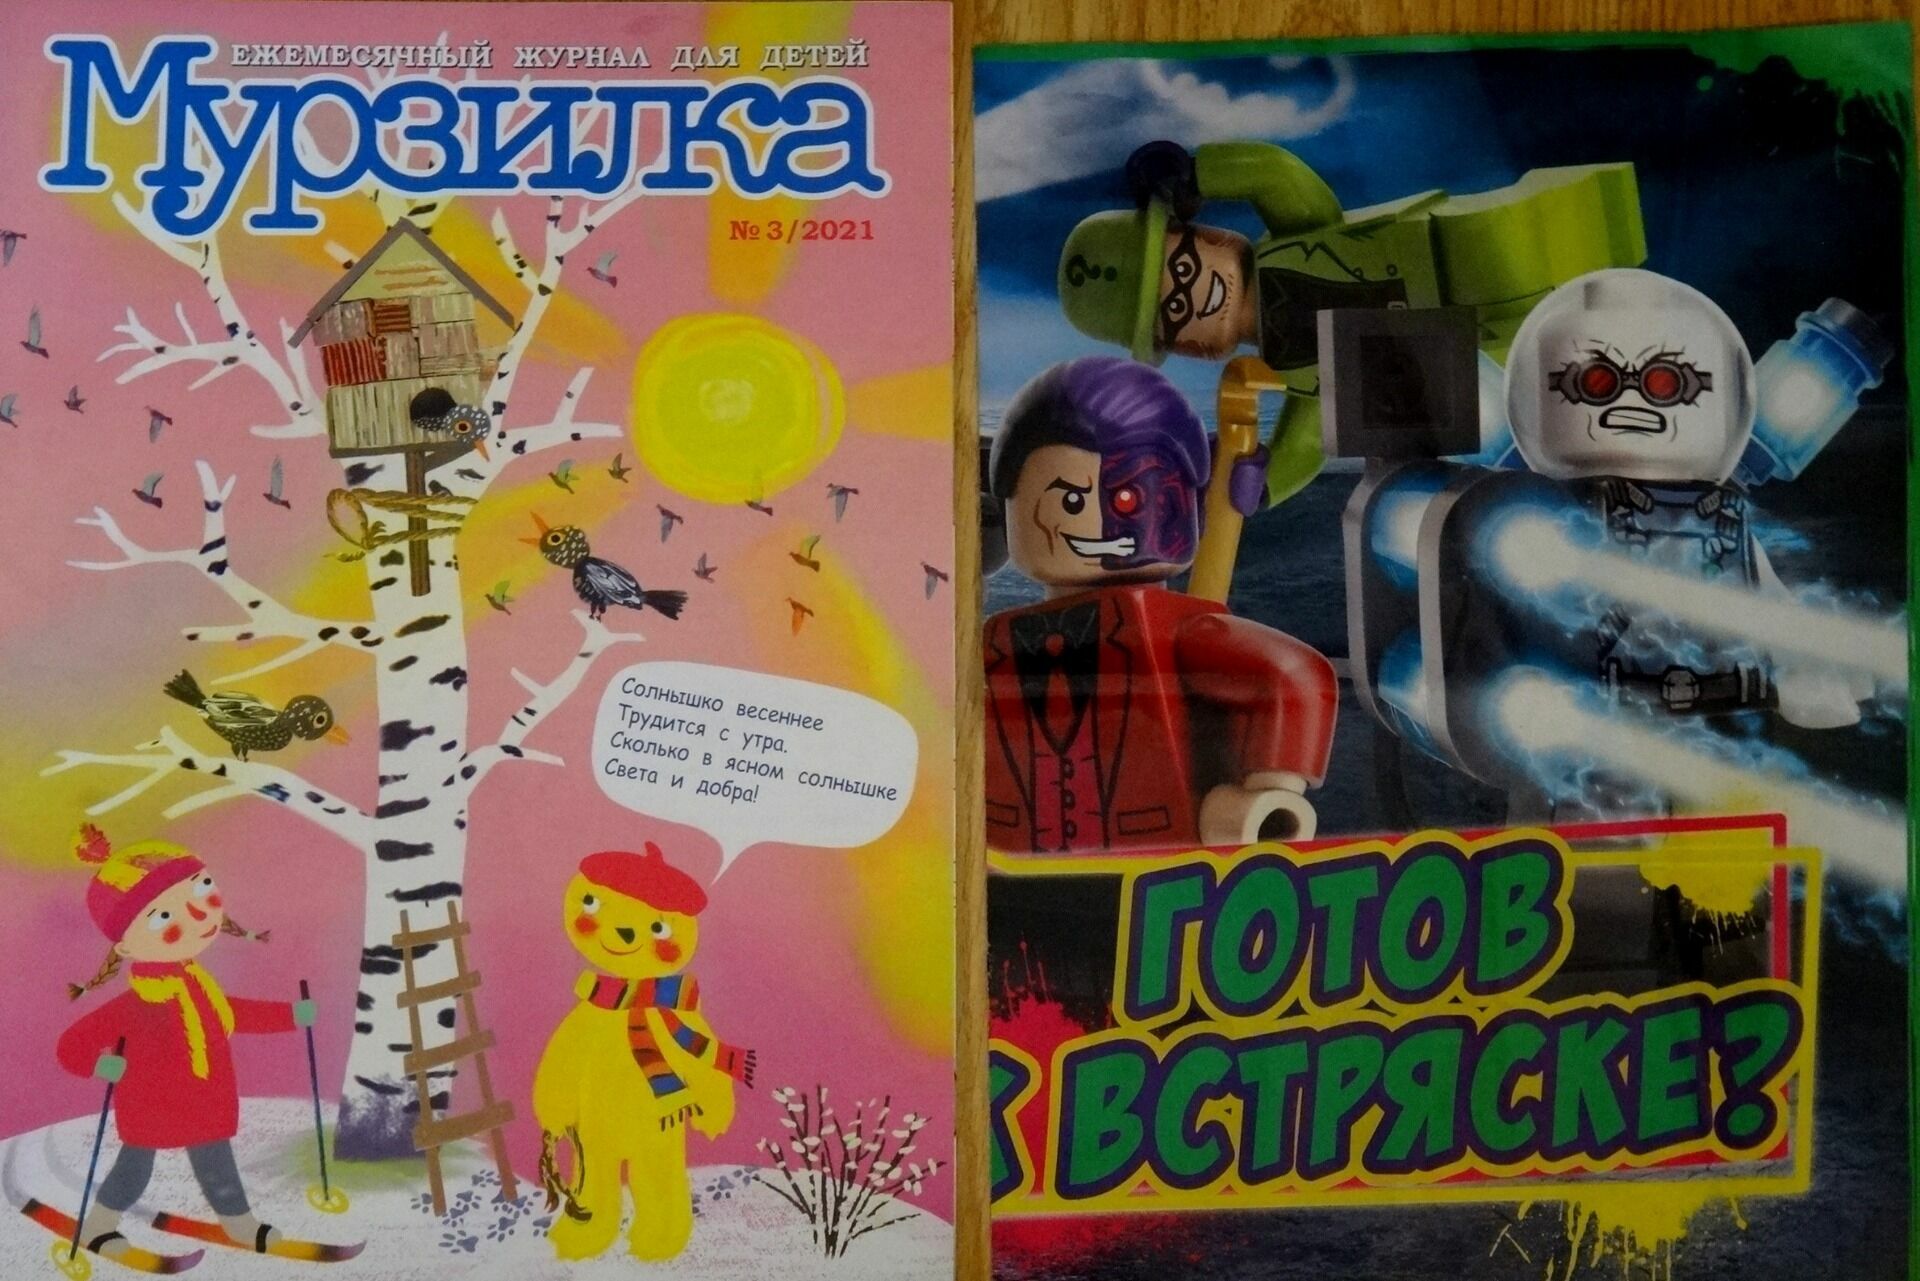 Журнал Мурзилка за 2021 год и журнал Lego.  Называется, почувствуйте разницу.